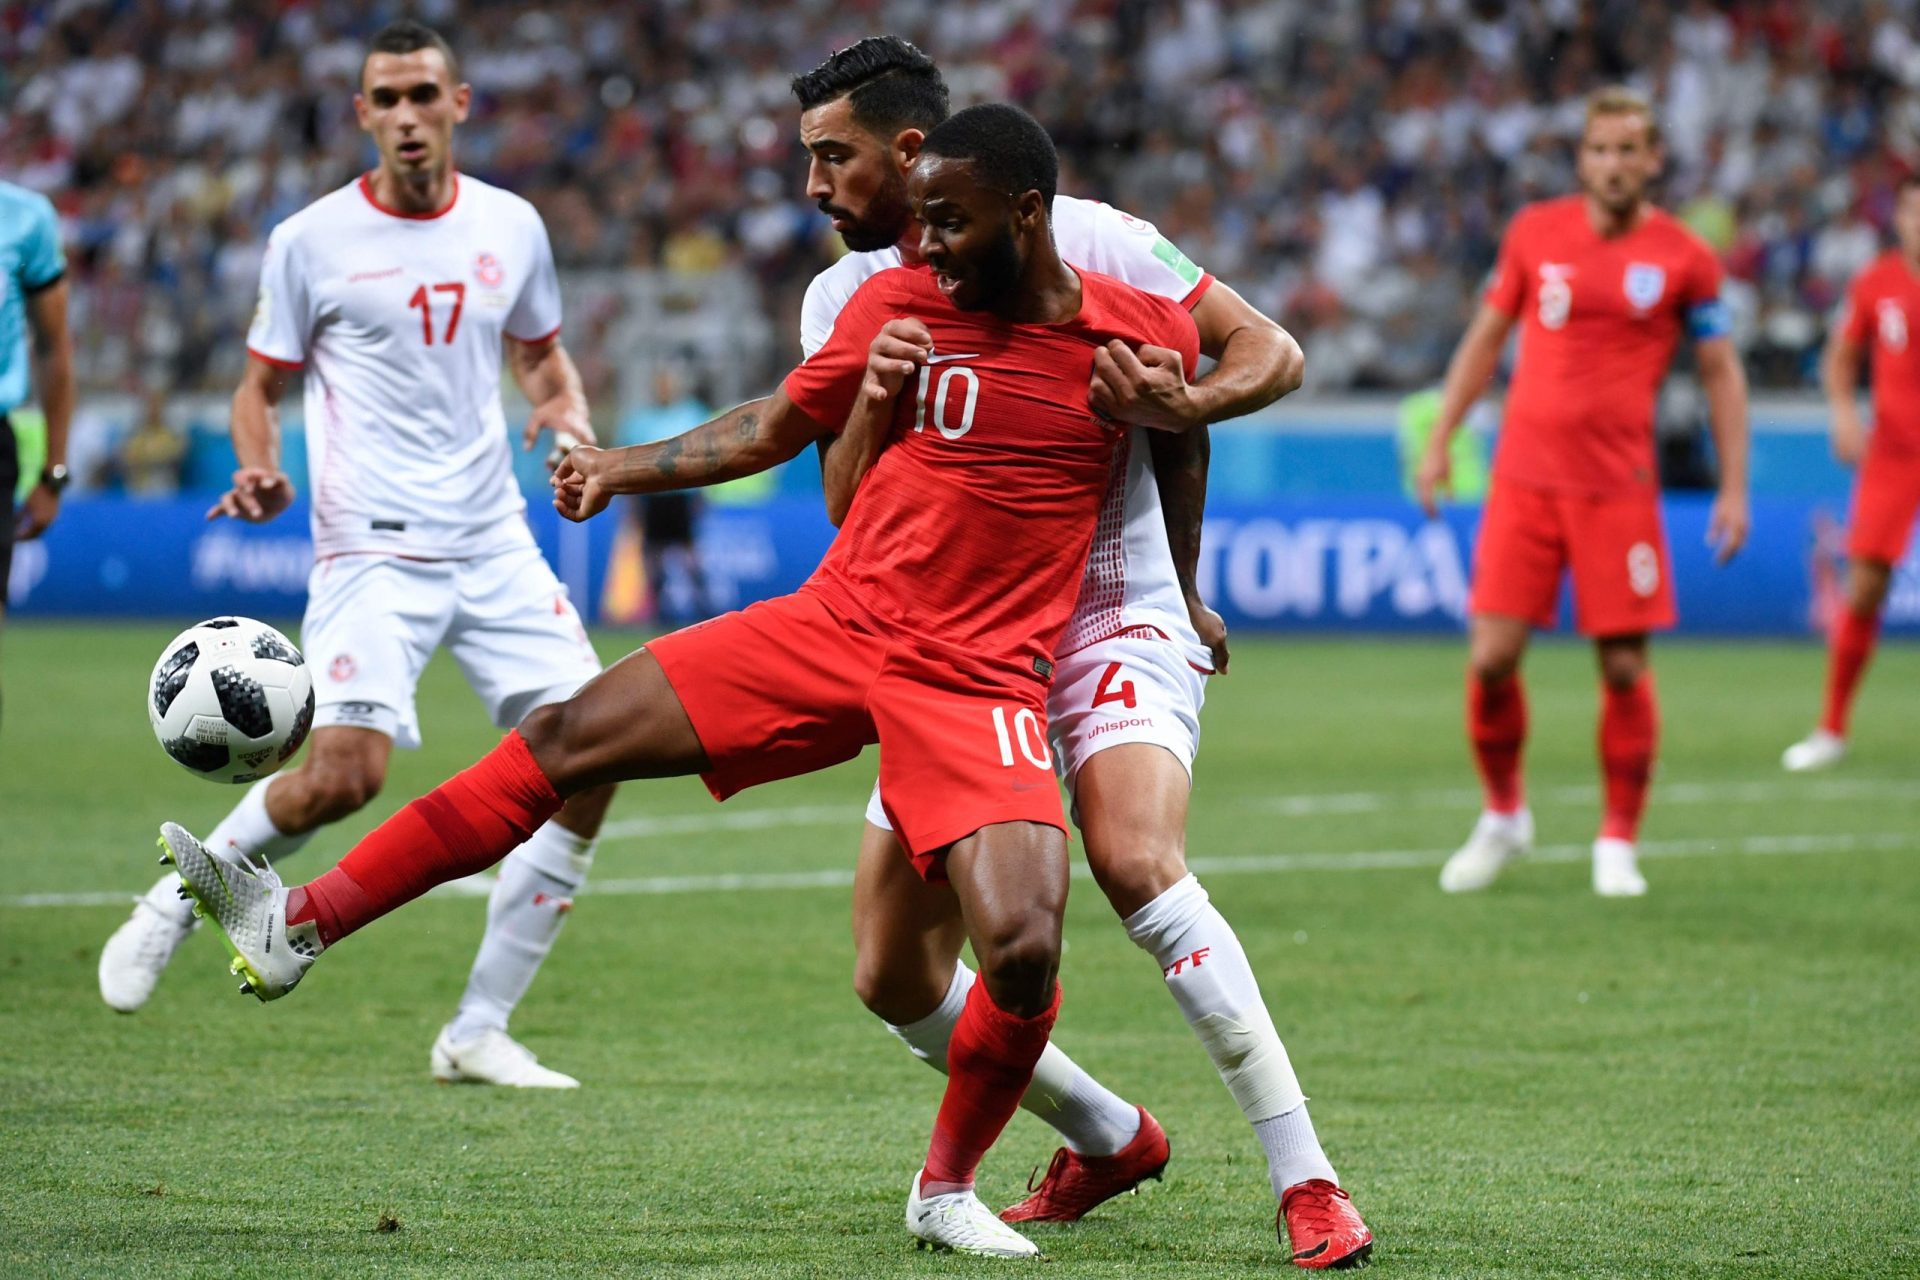 Mundial 2018. Inglaterra vence Tunísia com dois golos de Harry Kane